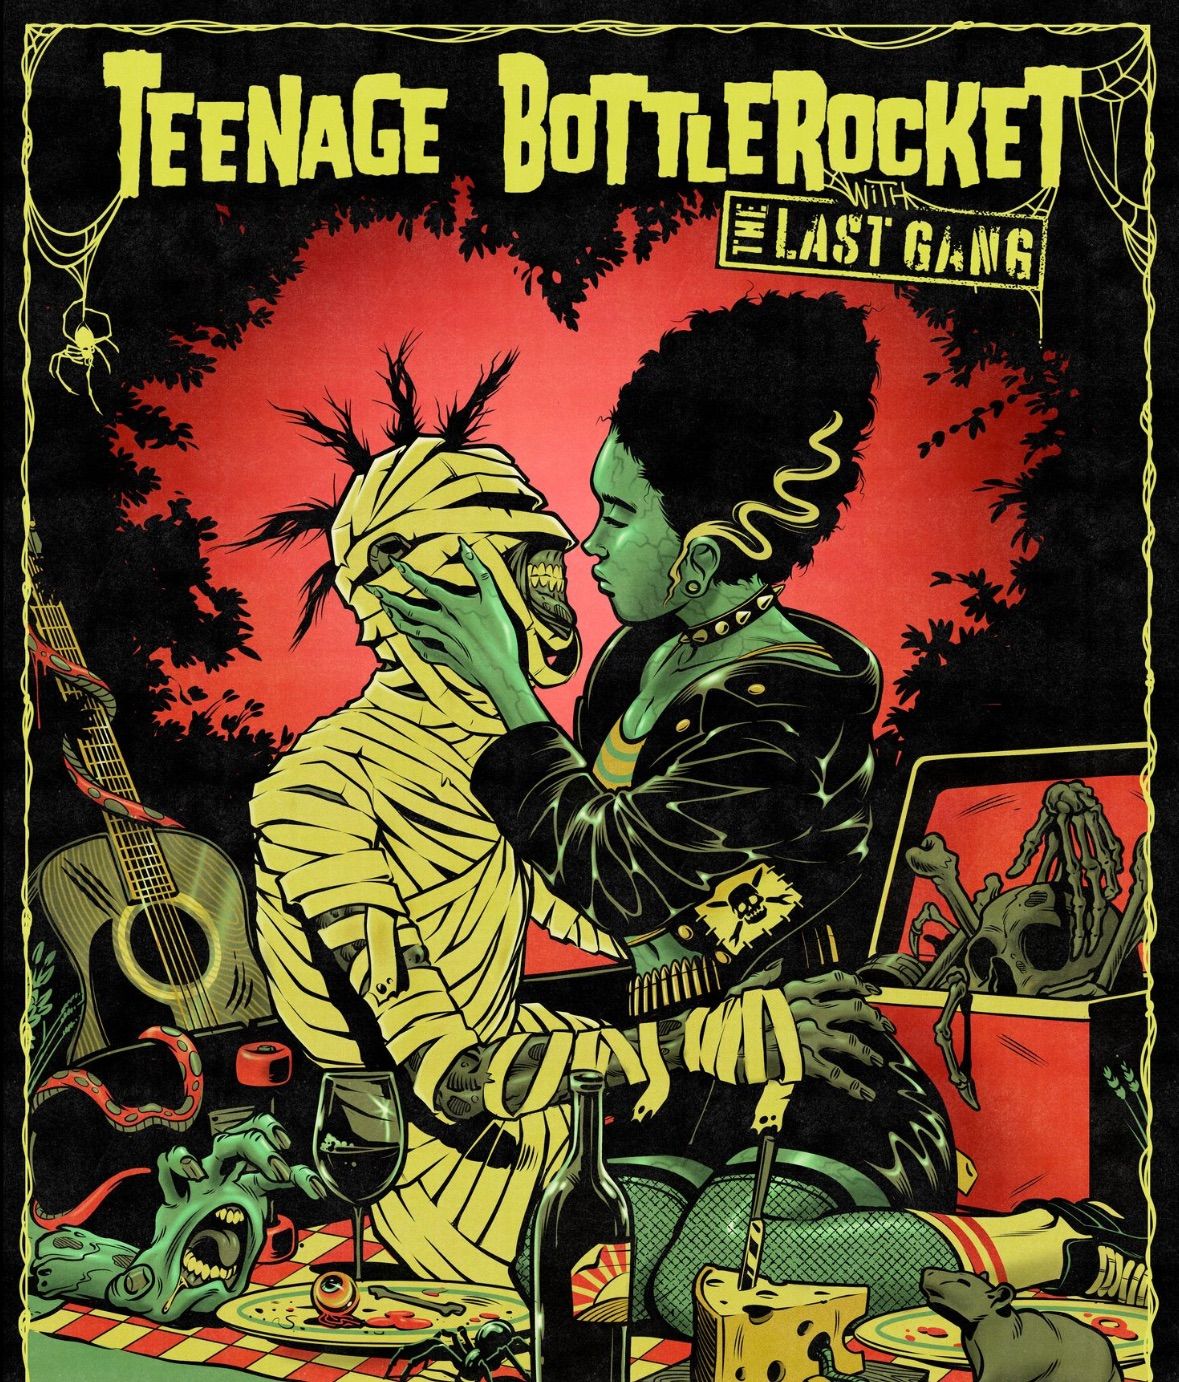 Teenage Bottlerocket with The Last Gang and Rocket 77!